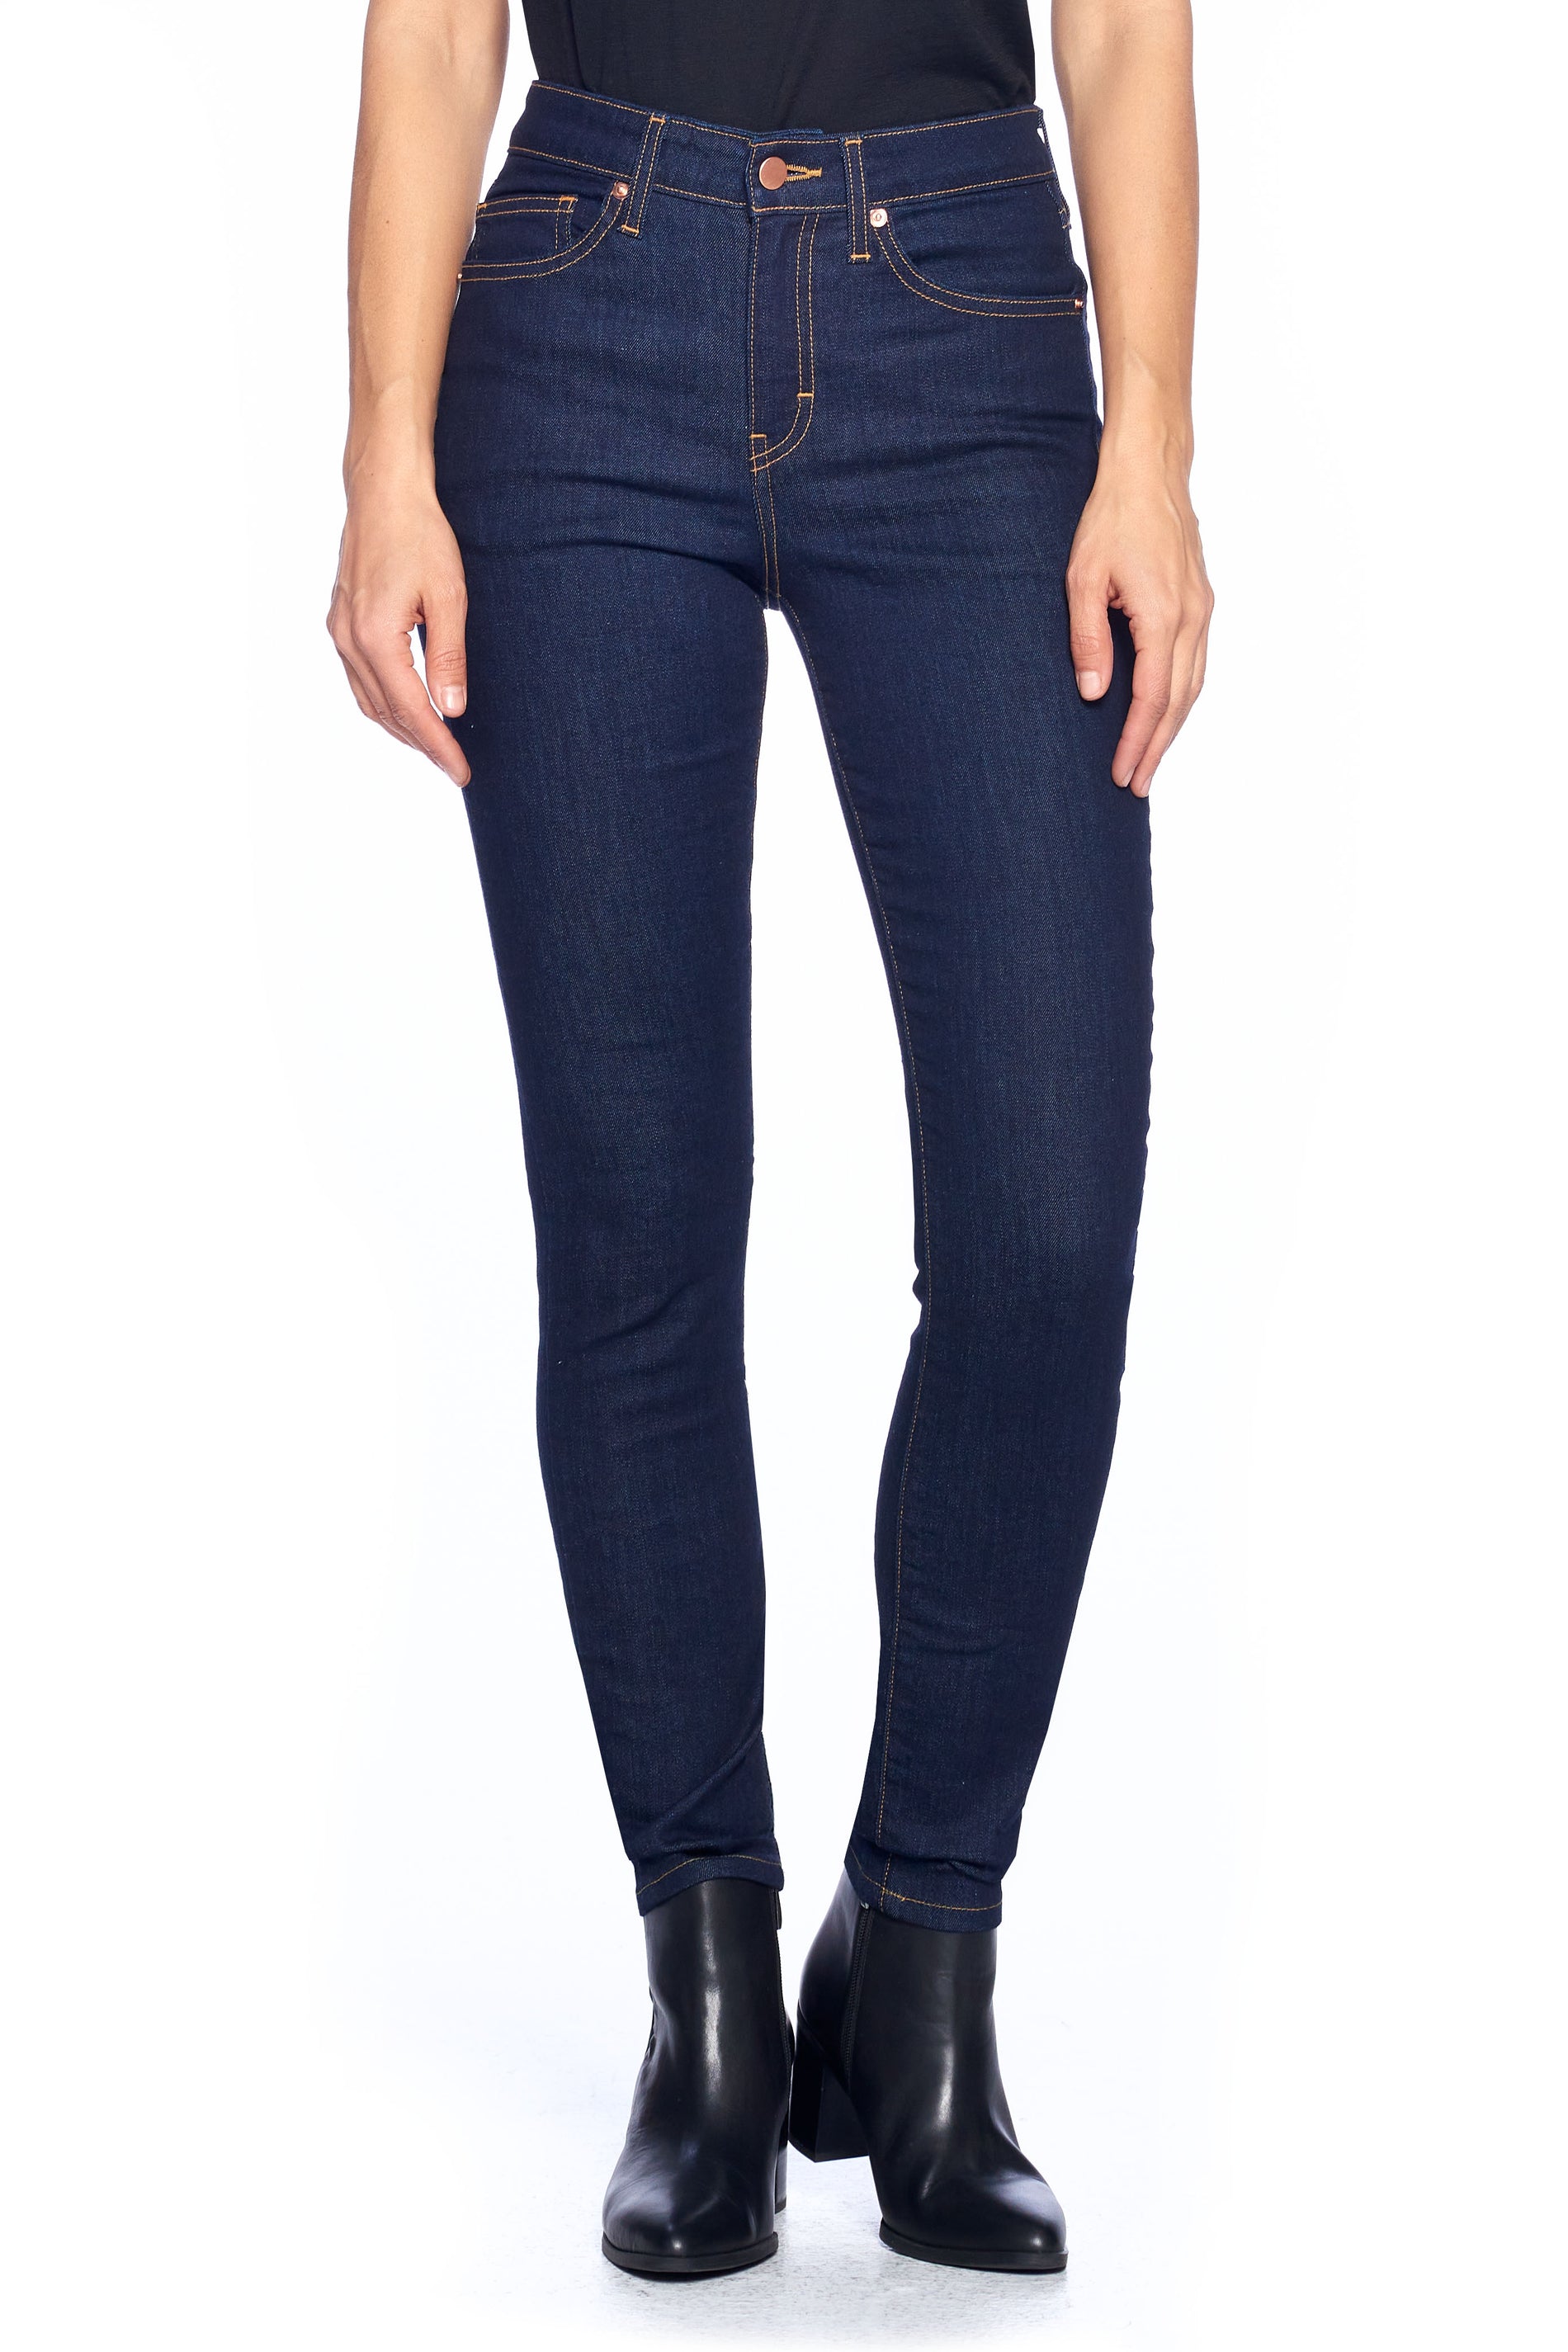 Women's Comfort Skinny Fit Jeans, Dark Indigo, Made in the USA - Aviator